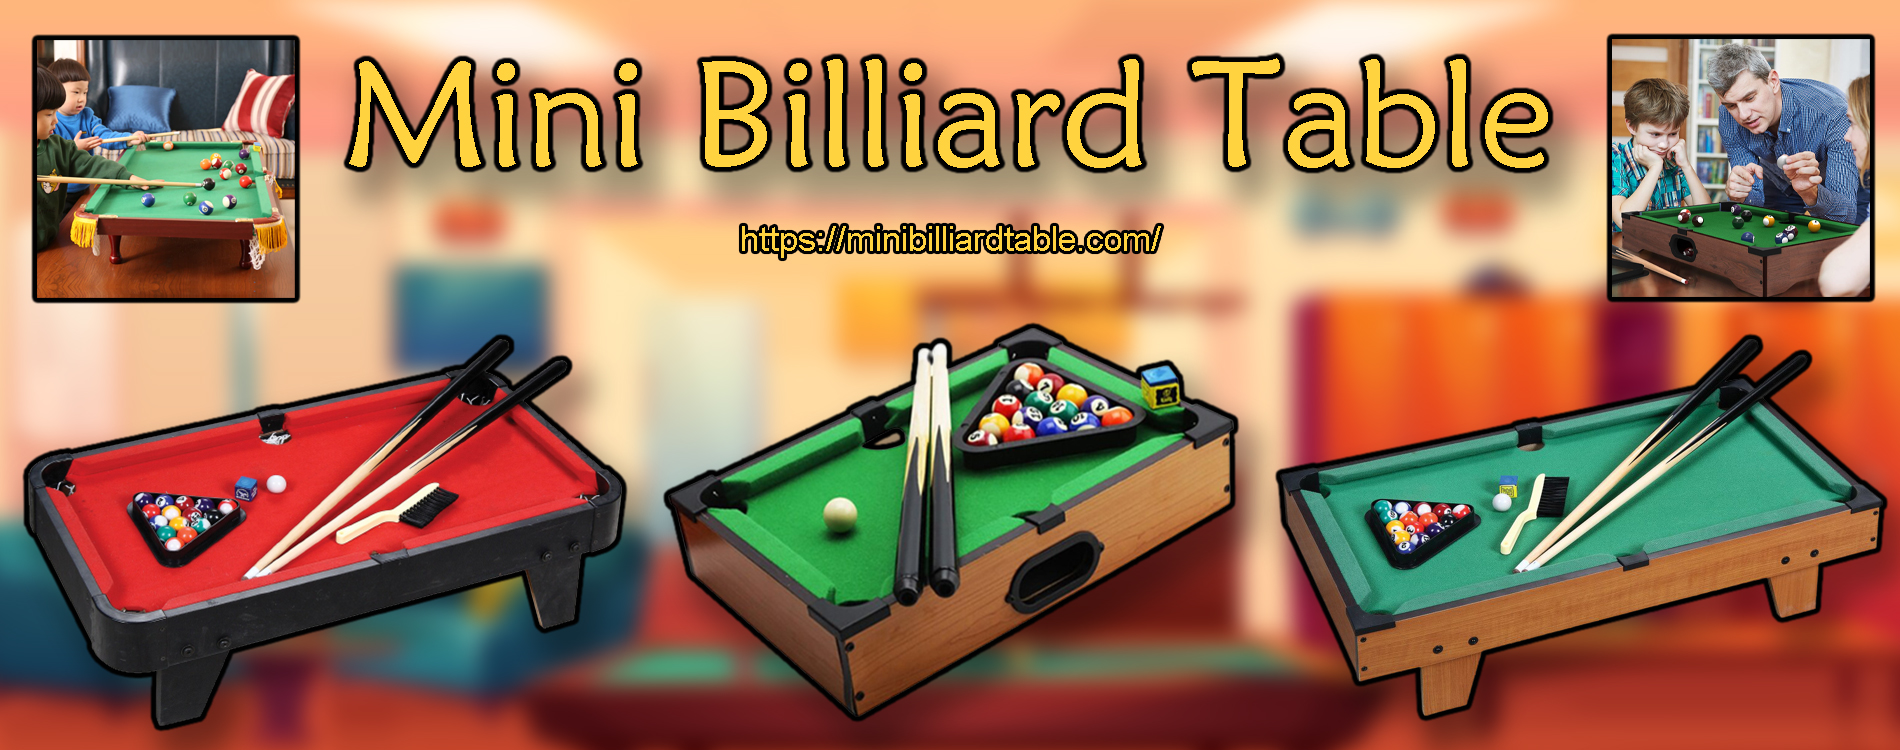 mini-billiard-table-banner